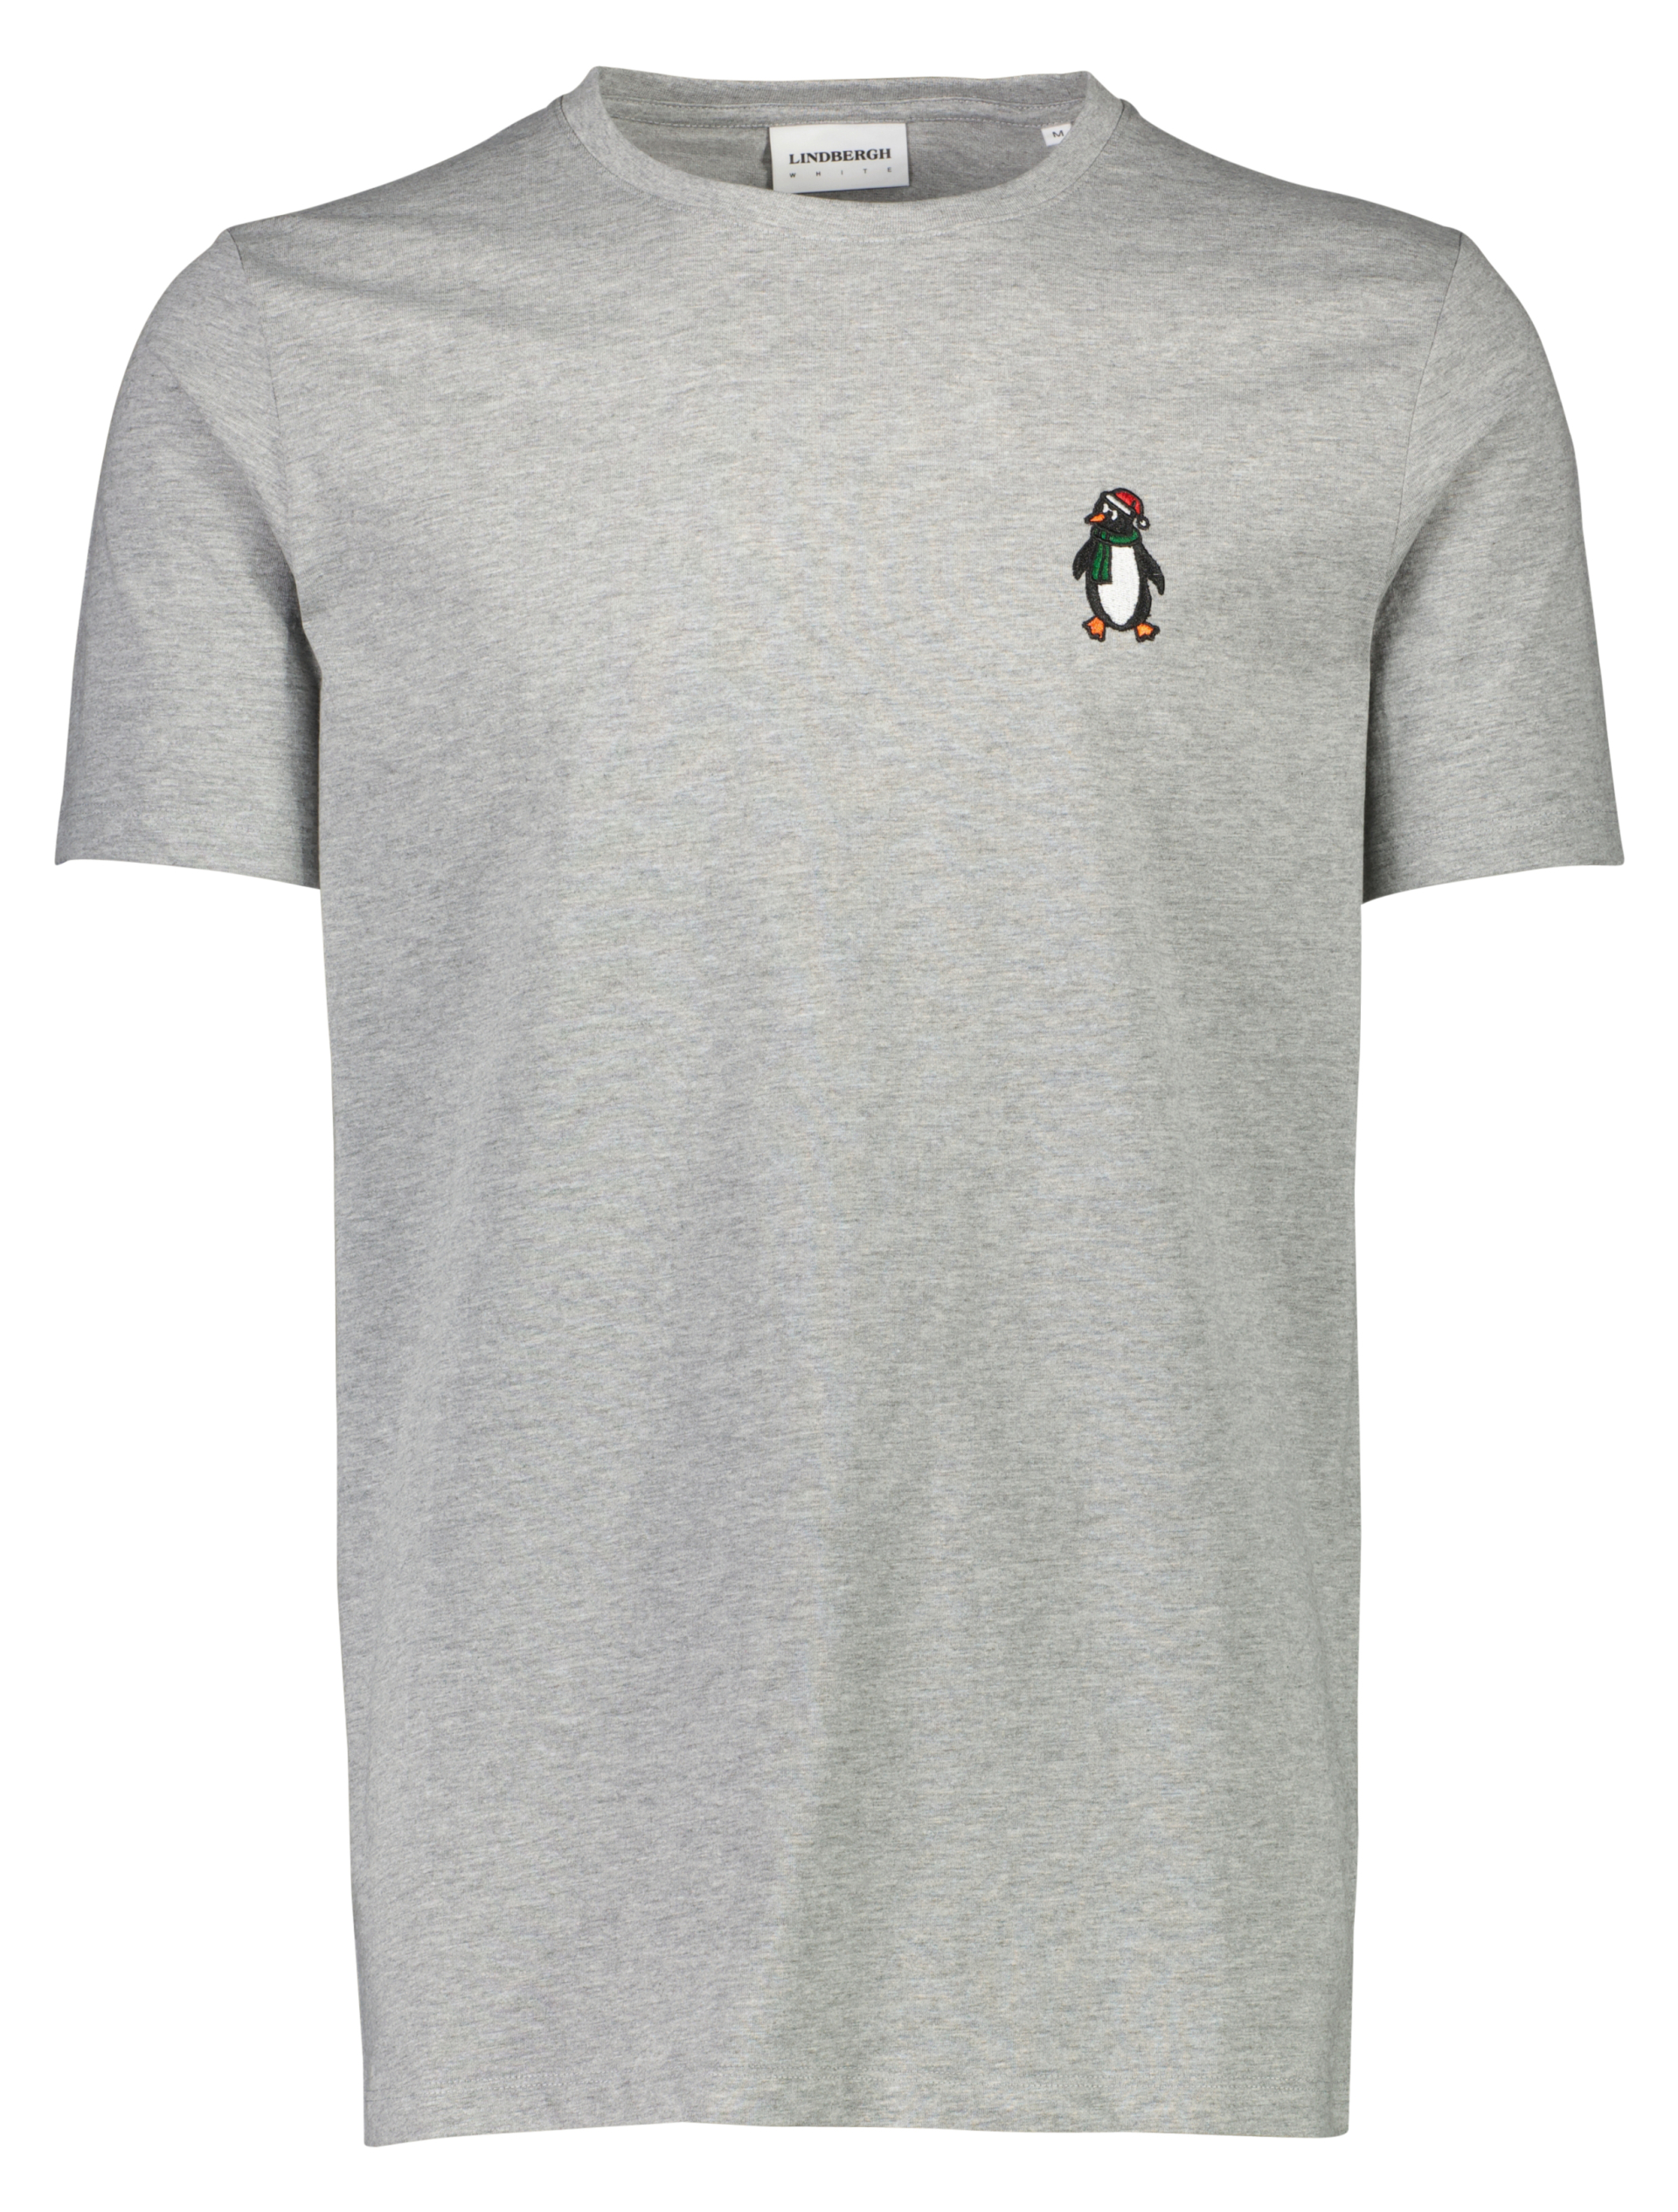 Lindbergh T-shirt grå / grey mel